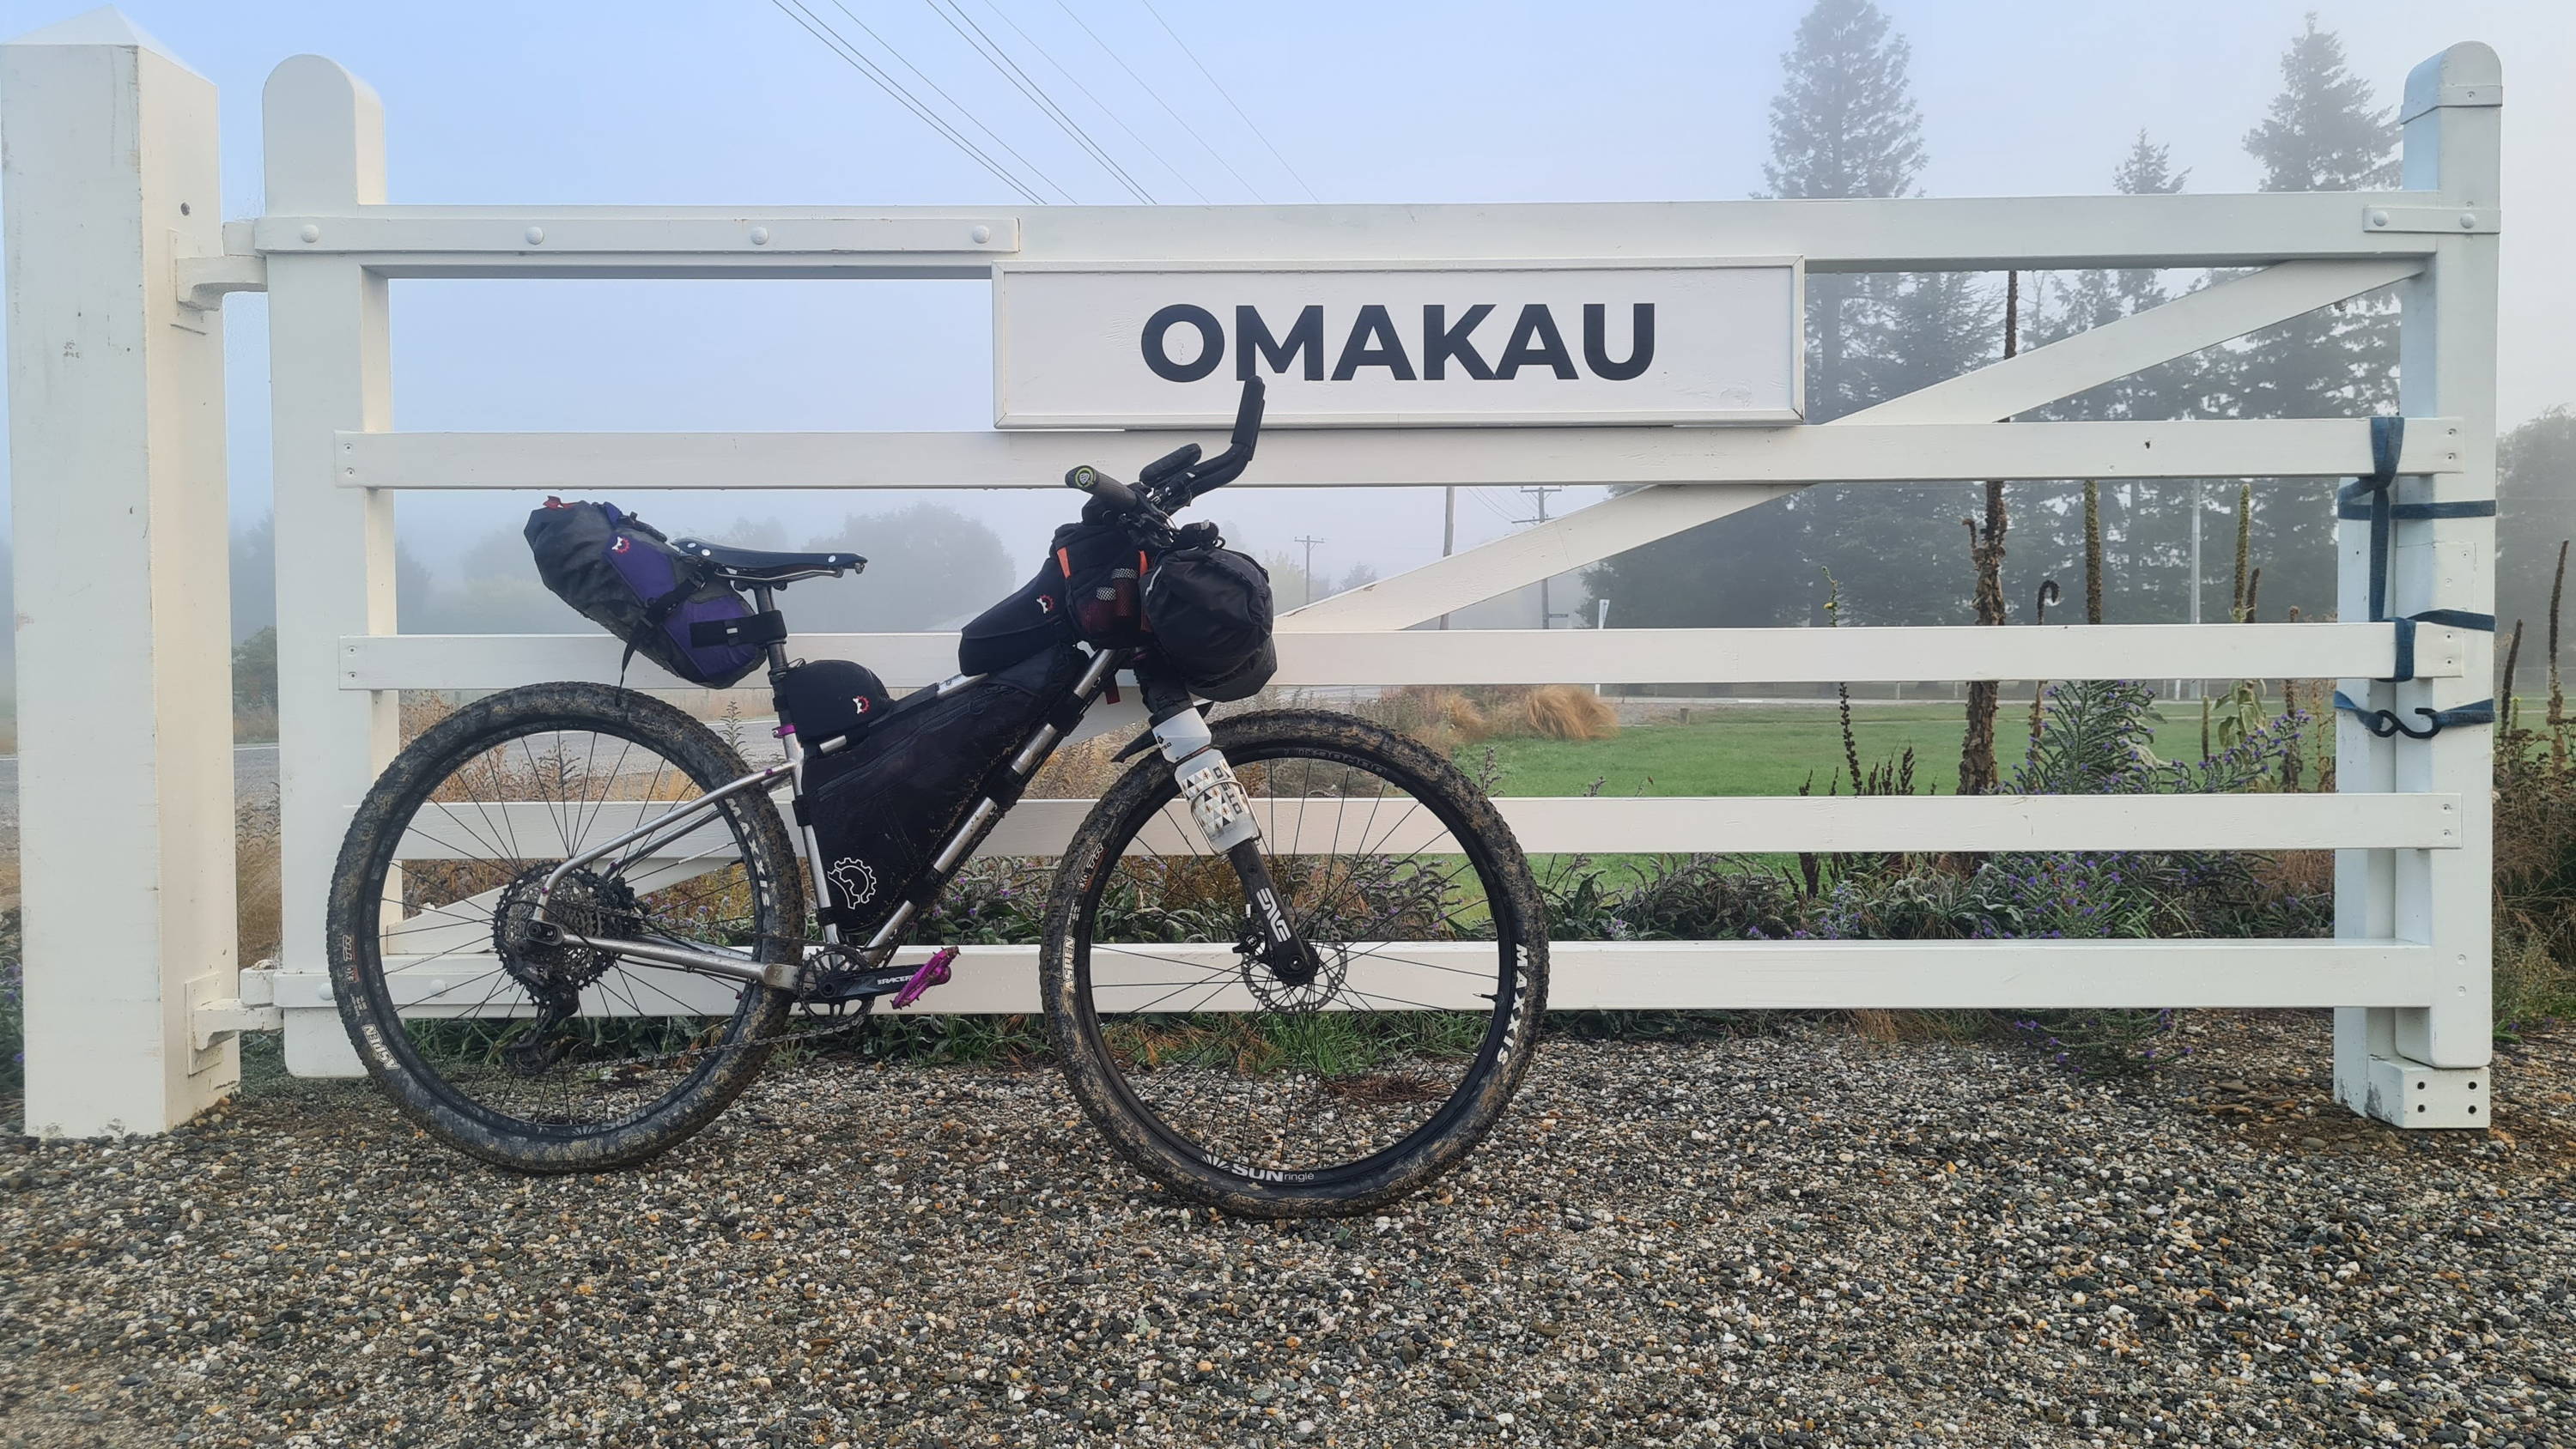 A fully-loaded Otso bikepacking bike leans against a white gate that reads 